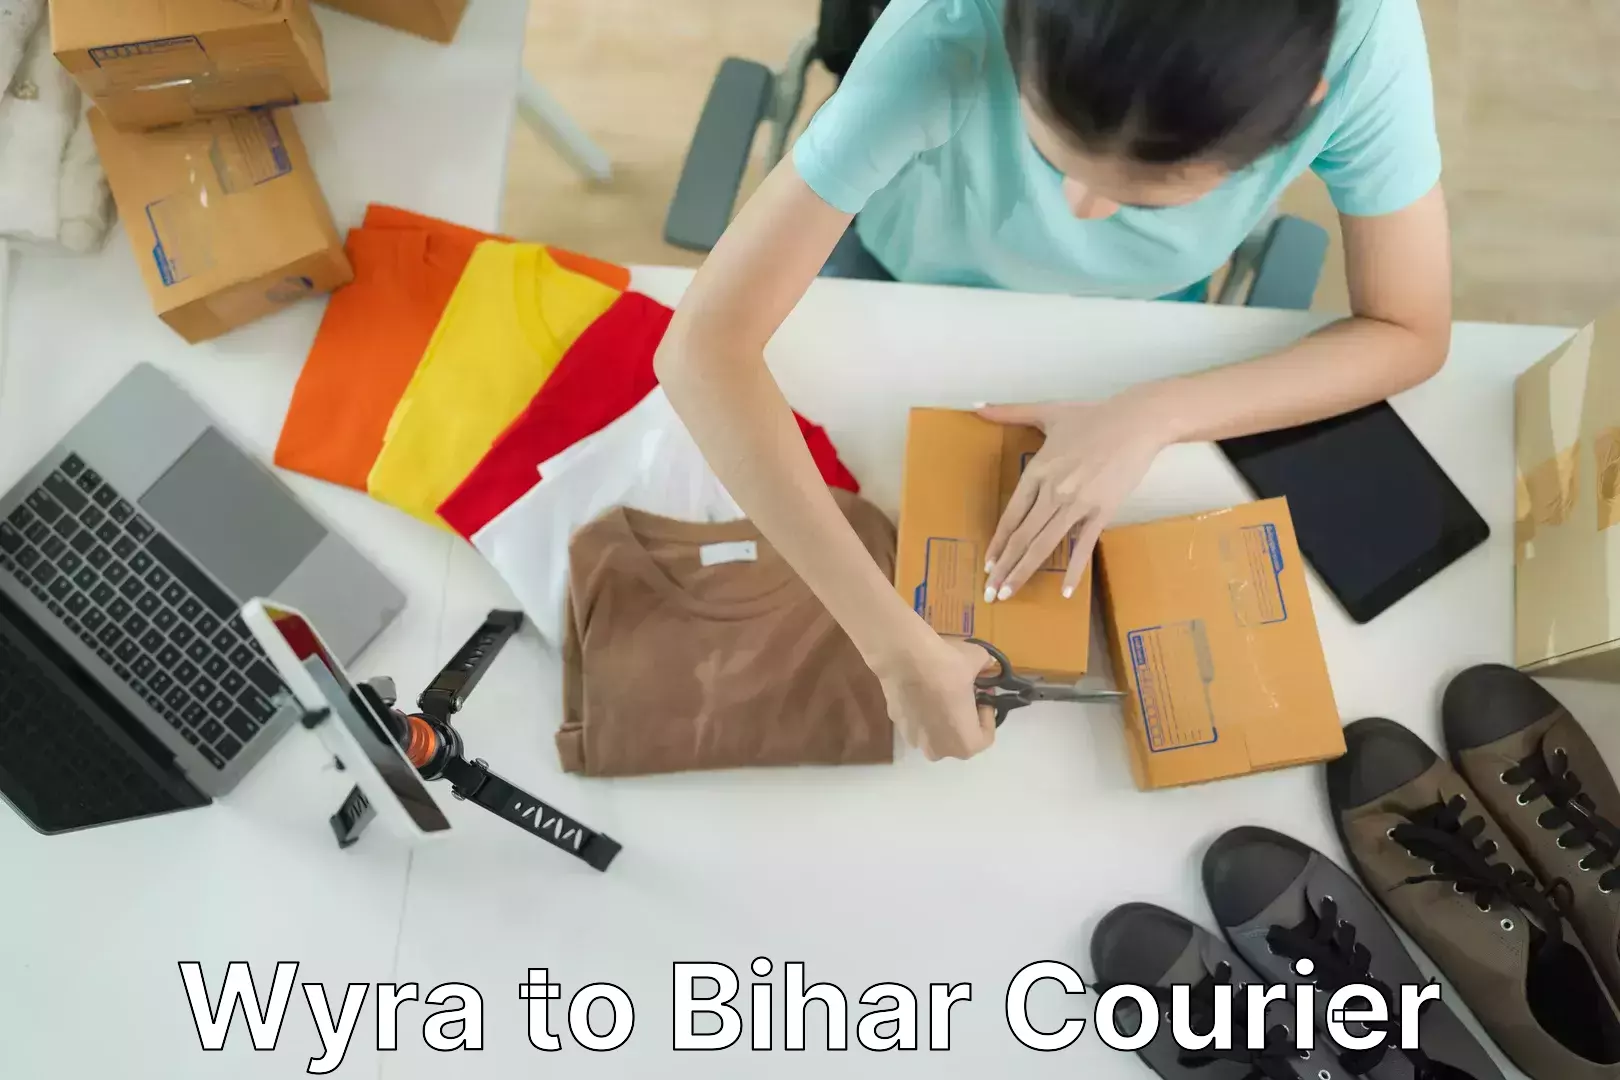 Efficient moving company Wyra to Bihar